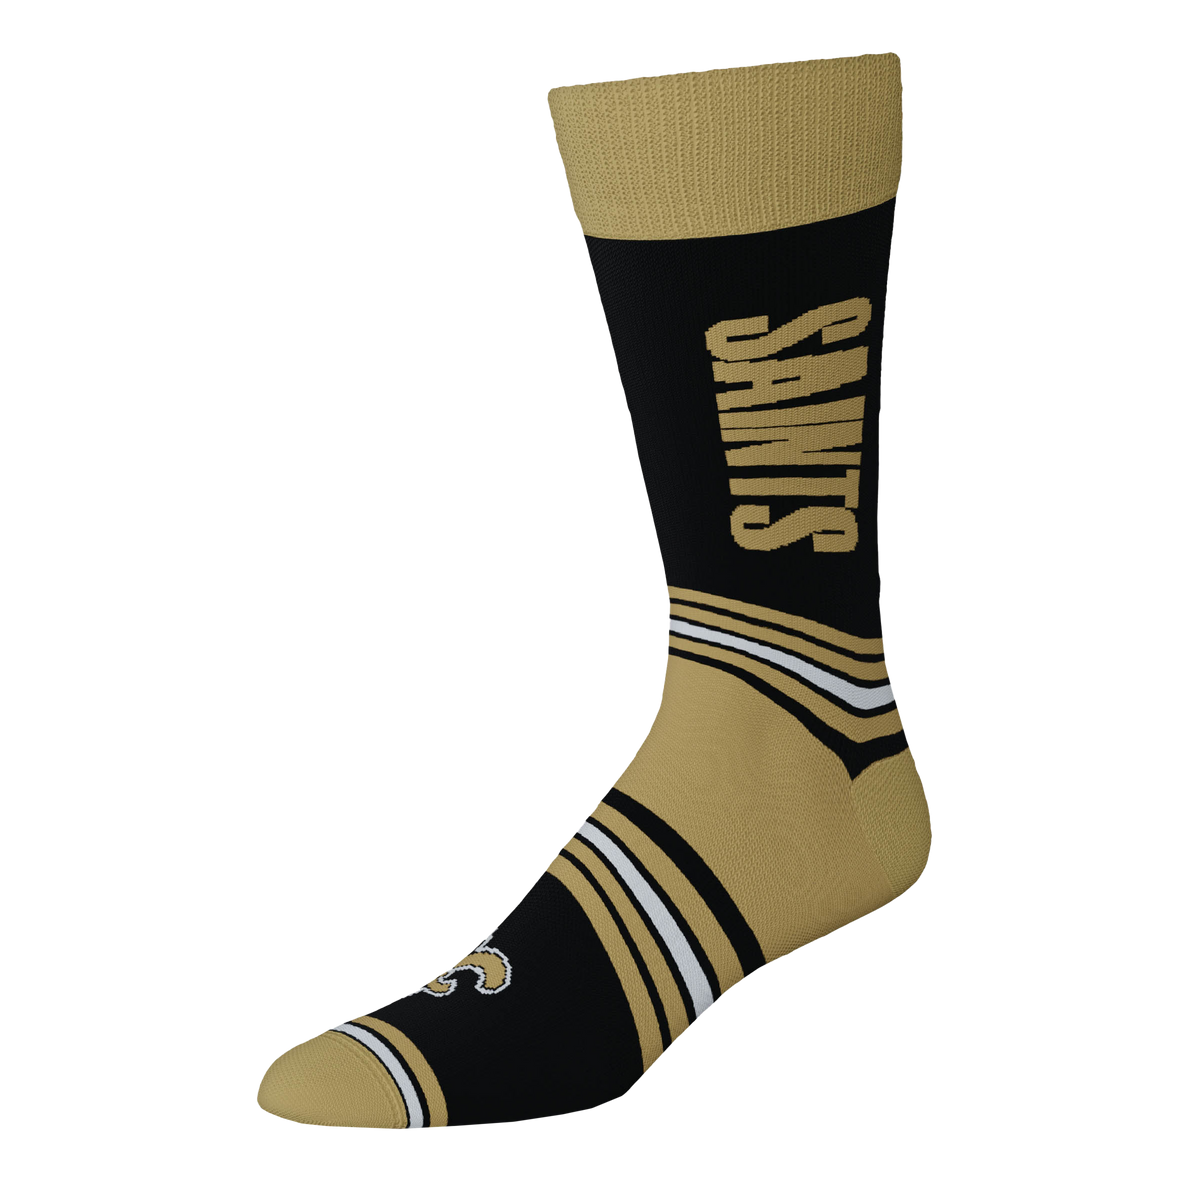 New Orleans Saints - Go Team! Socks